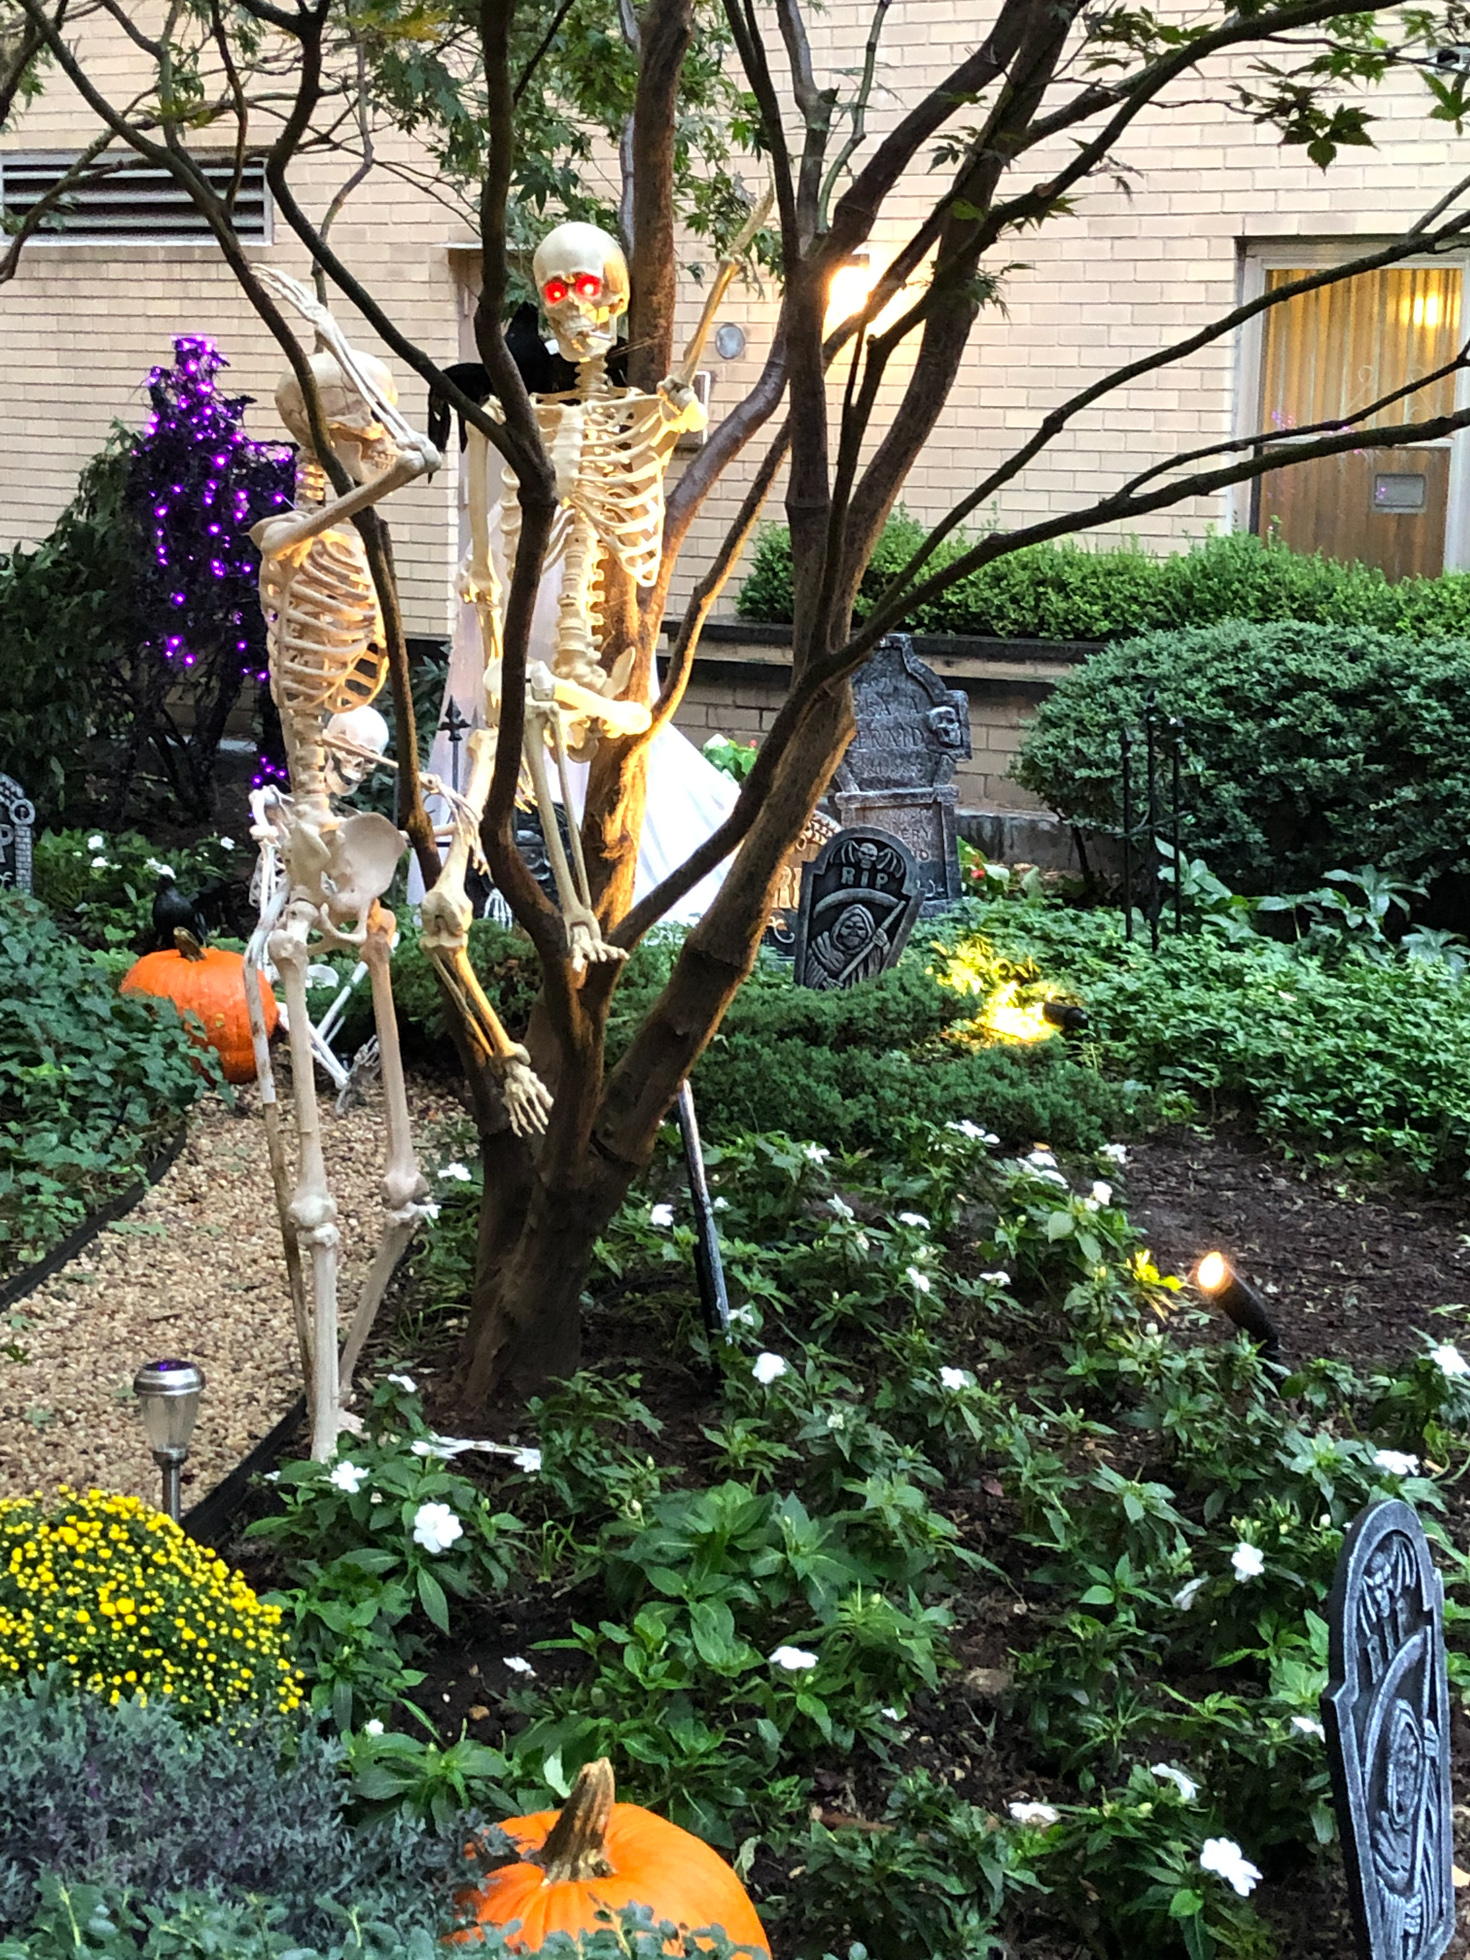 Village scares at East Ninth Street Halloween display | amNewYork